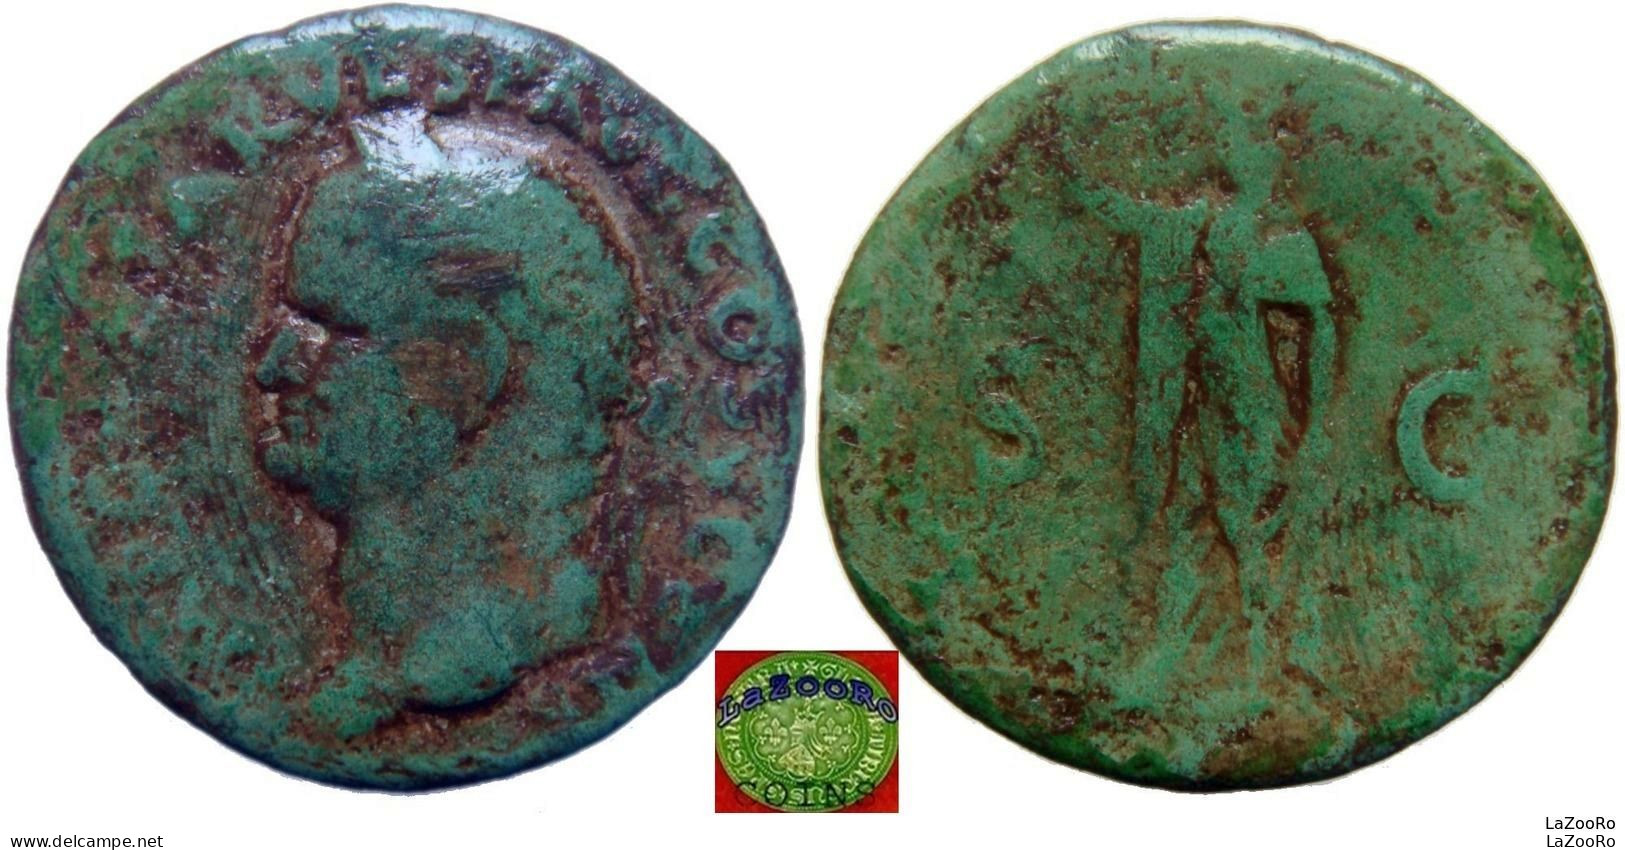 LaZooRo: Roman Empire - AE As Of Vespasian (69-79 AD), Spes - The Flavians (69 AD Tot 96 AD)